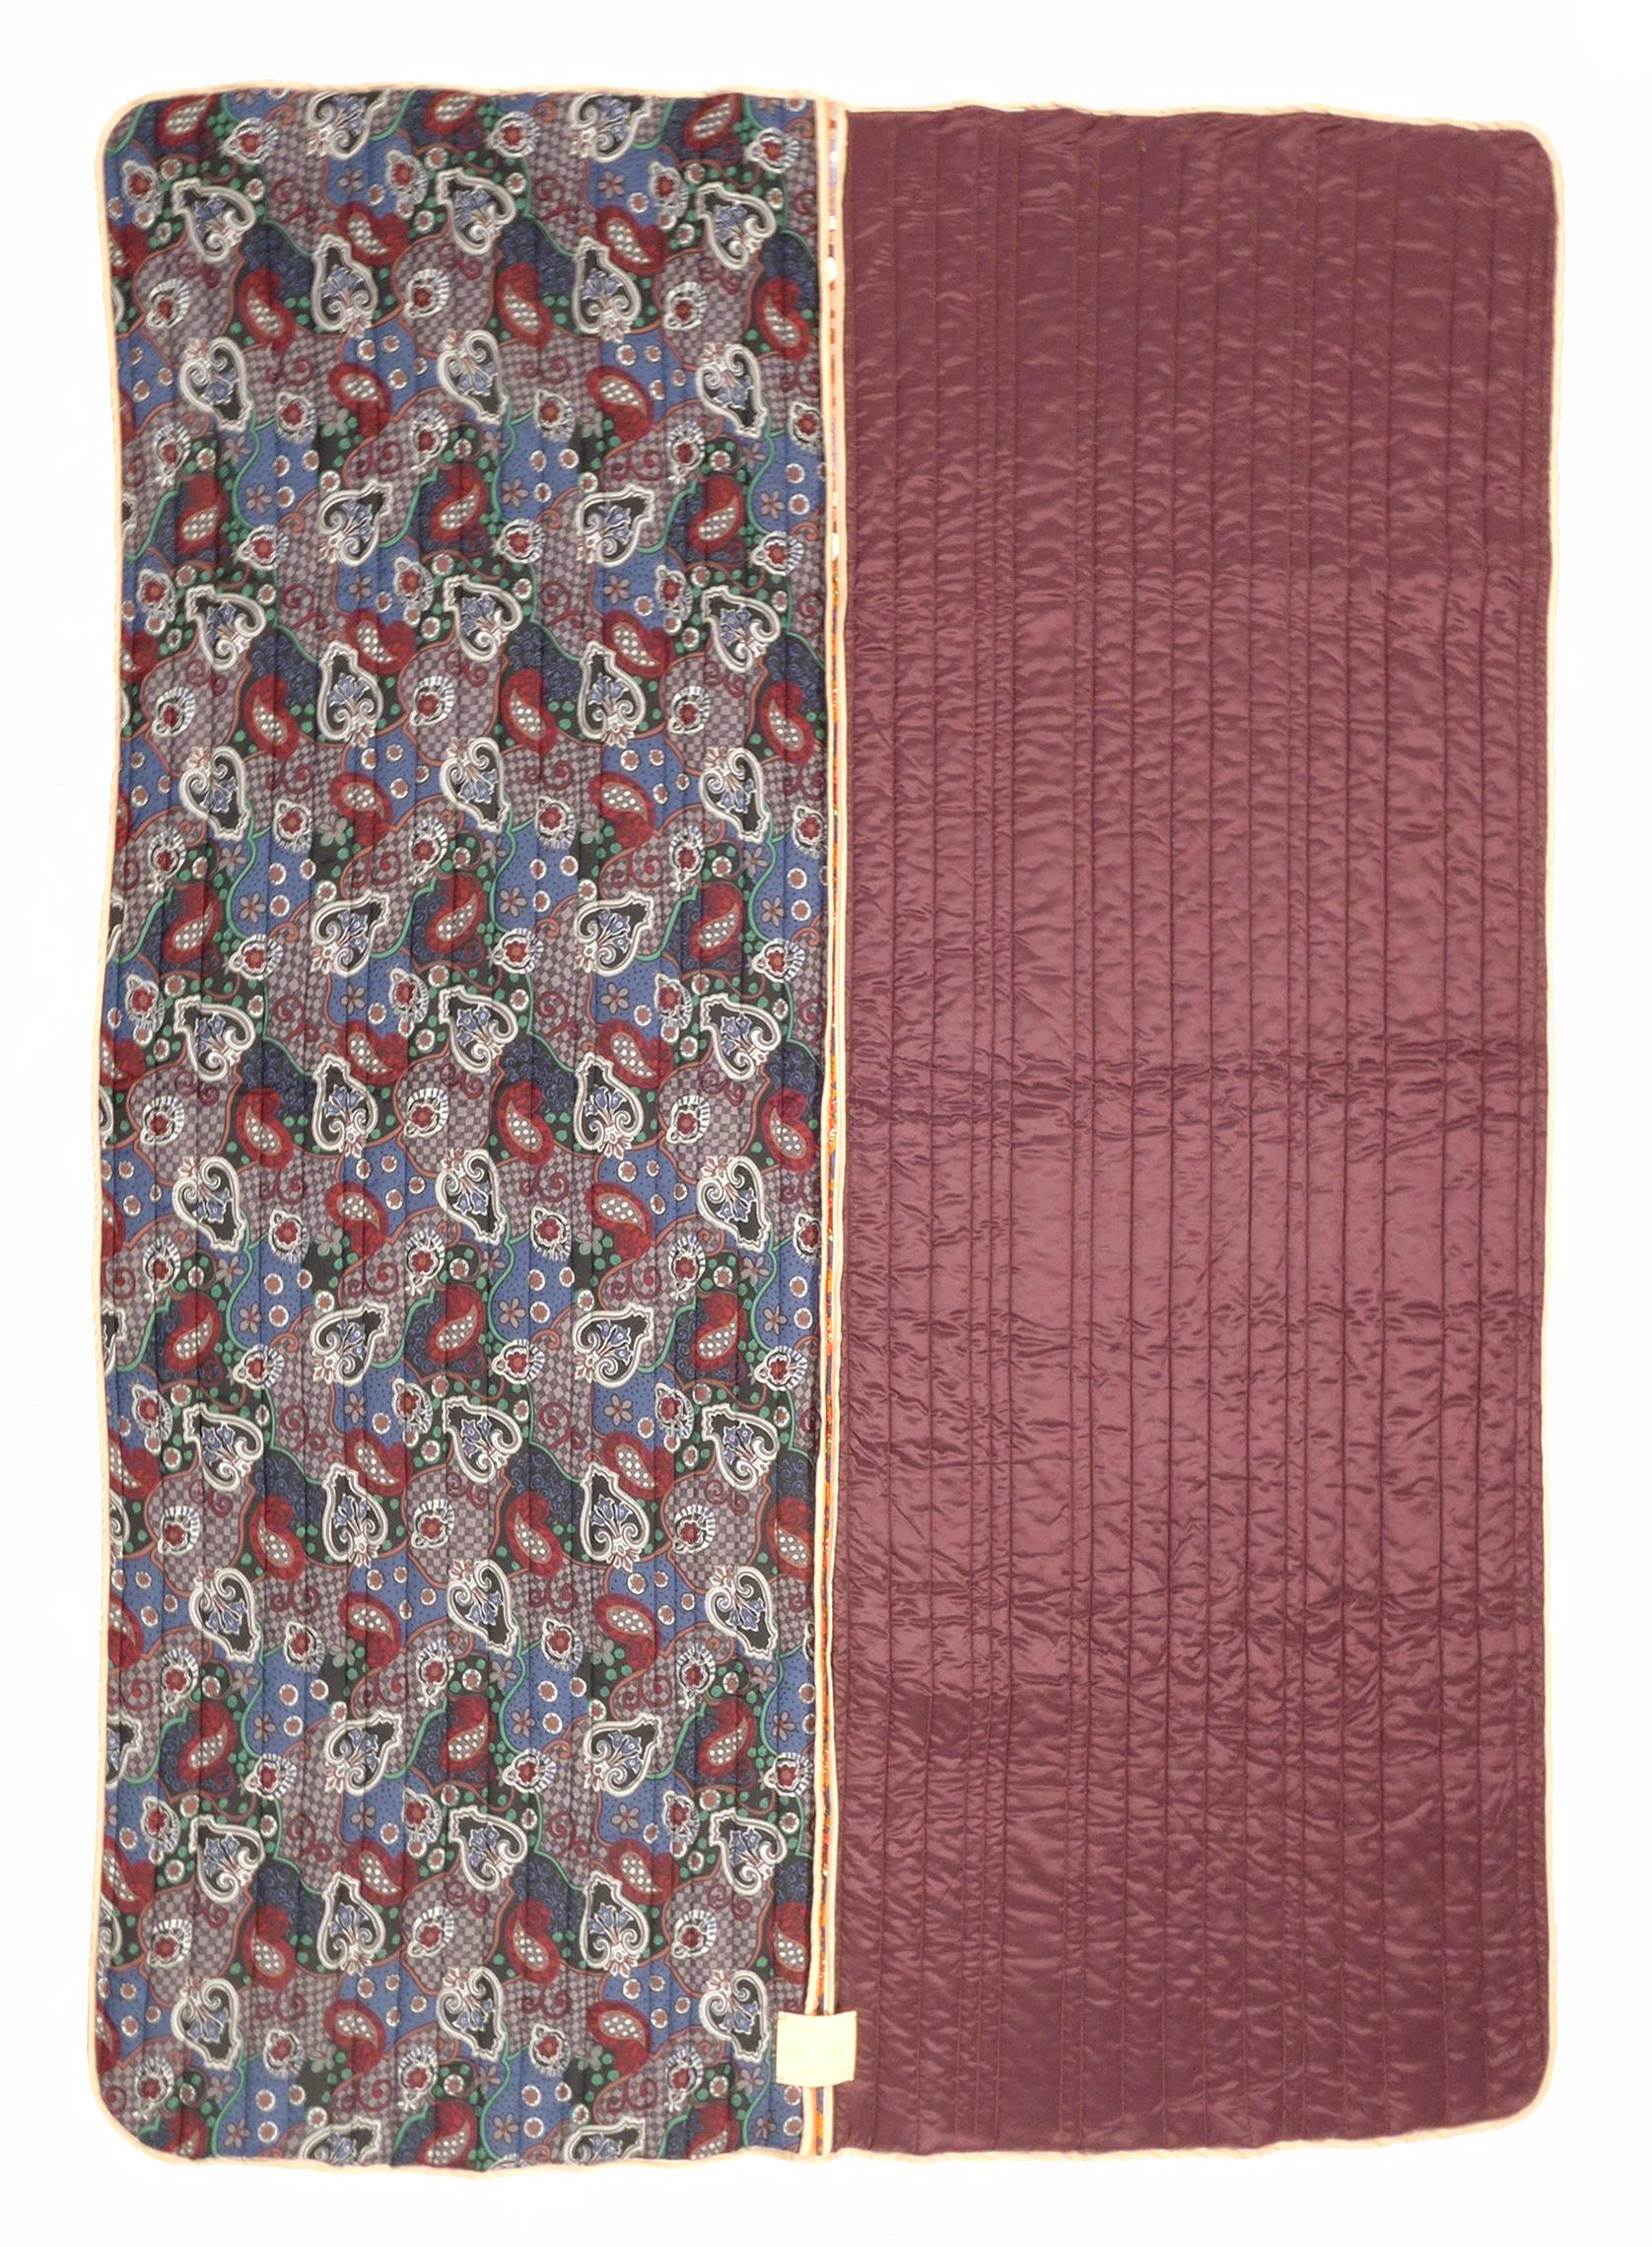 Vintage Italian Silk Quilt Blanket by Piet Hein Eek In Excellent Condition For Sale In Amsterdam, NL